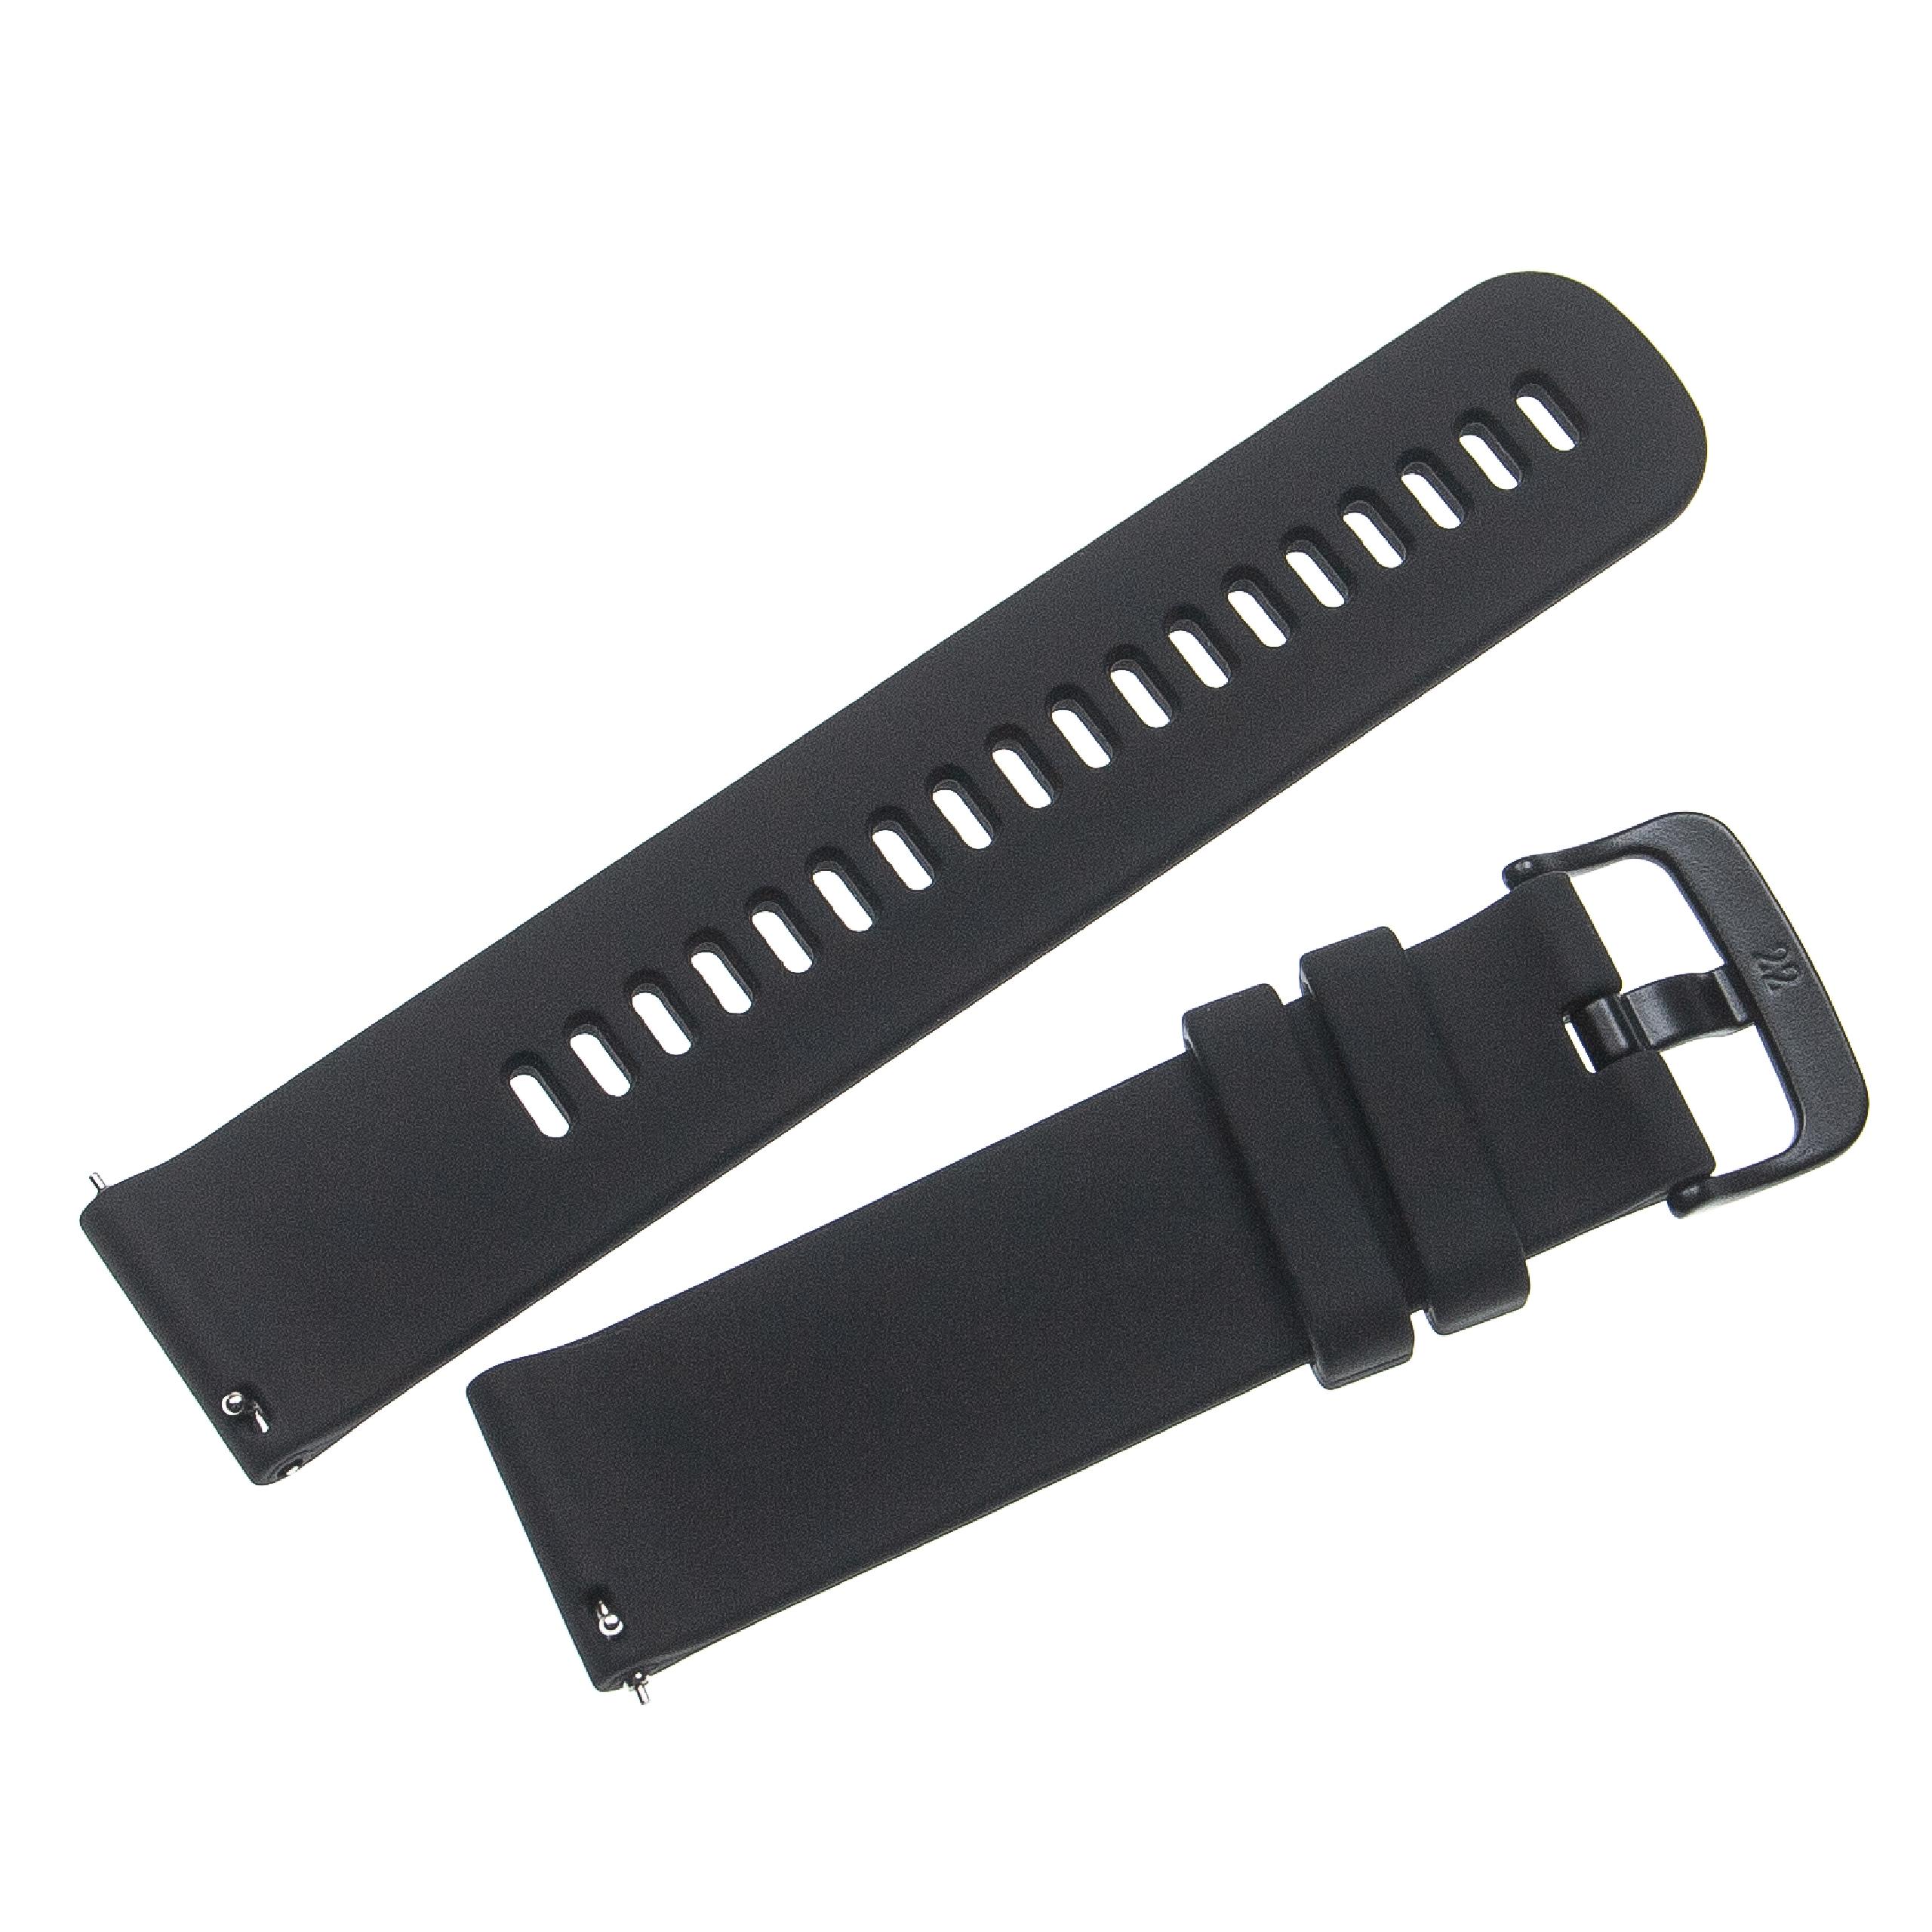 Pasek do smartwatch Garmin Forerunner - dł. 12,1 + 9,2 cm, szer. 22 mm, silikon, czarny